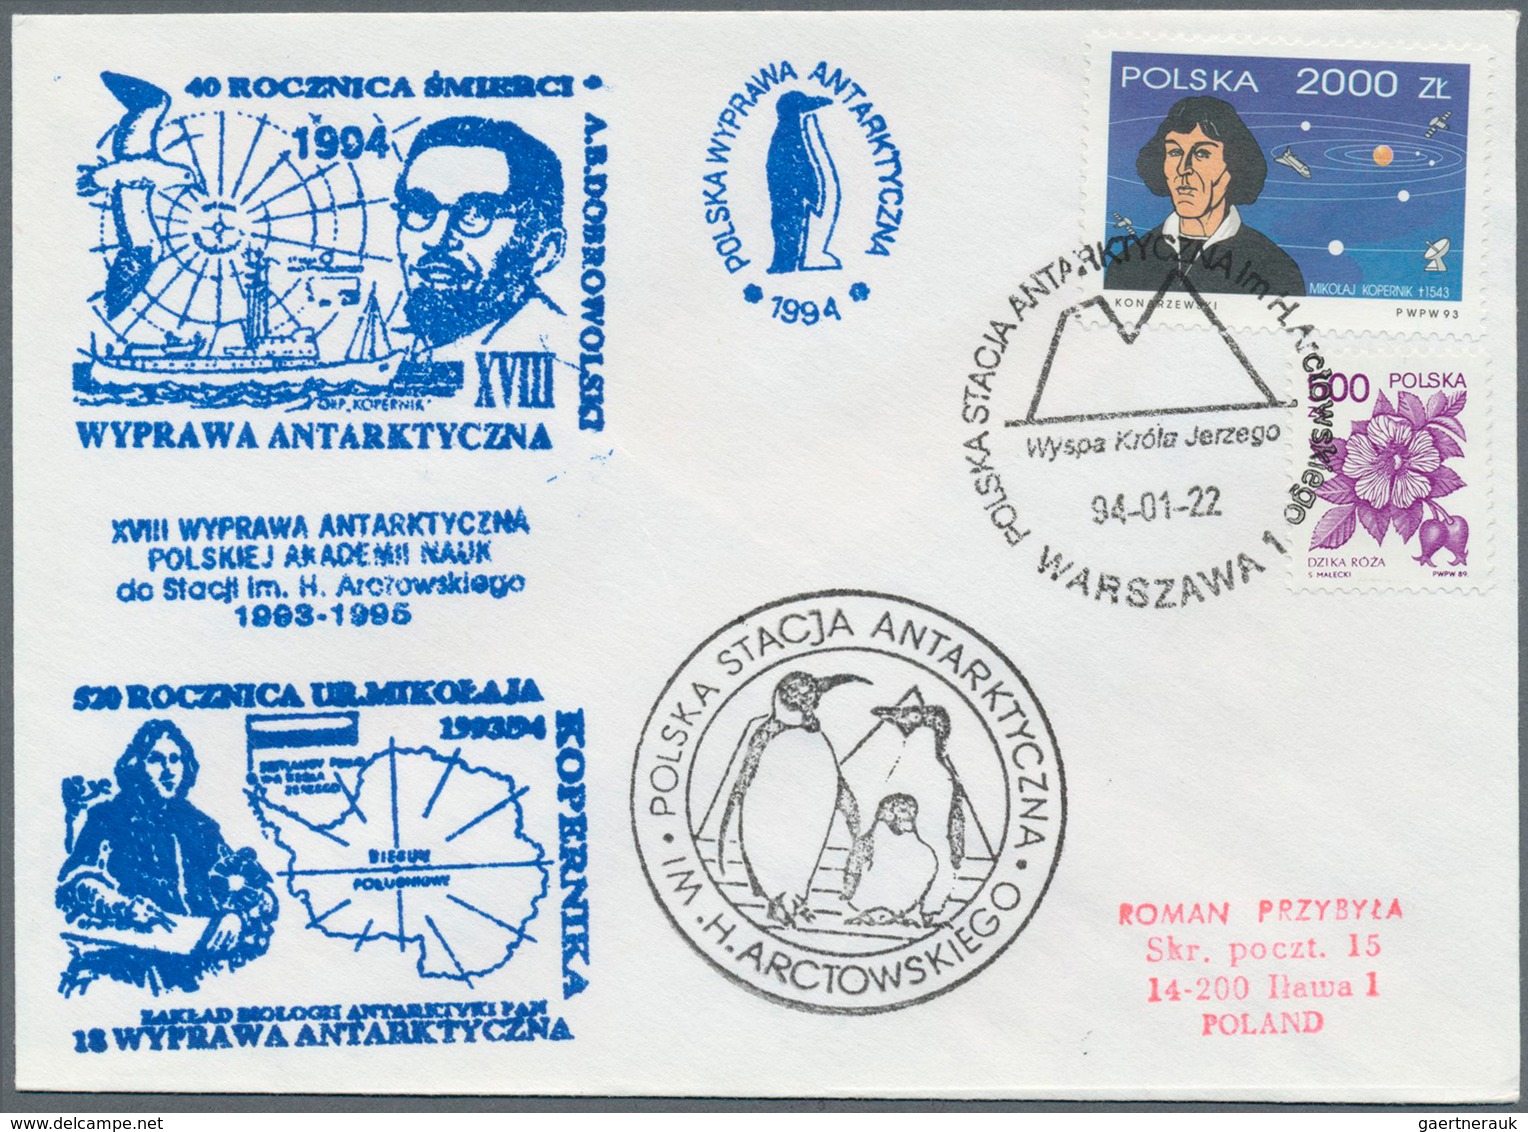 Thematik: Antarktis / antarctic: 1976/2005, POLISH ANTARCTIC RESEARCH, collection of apprx. 370 cove